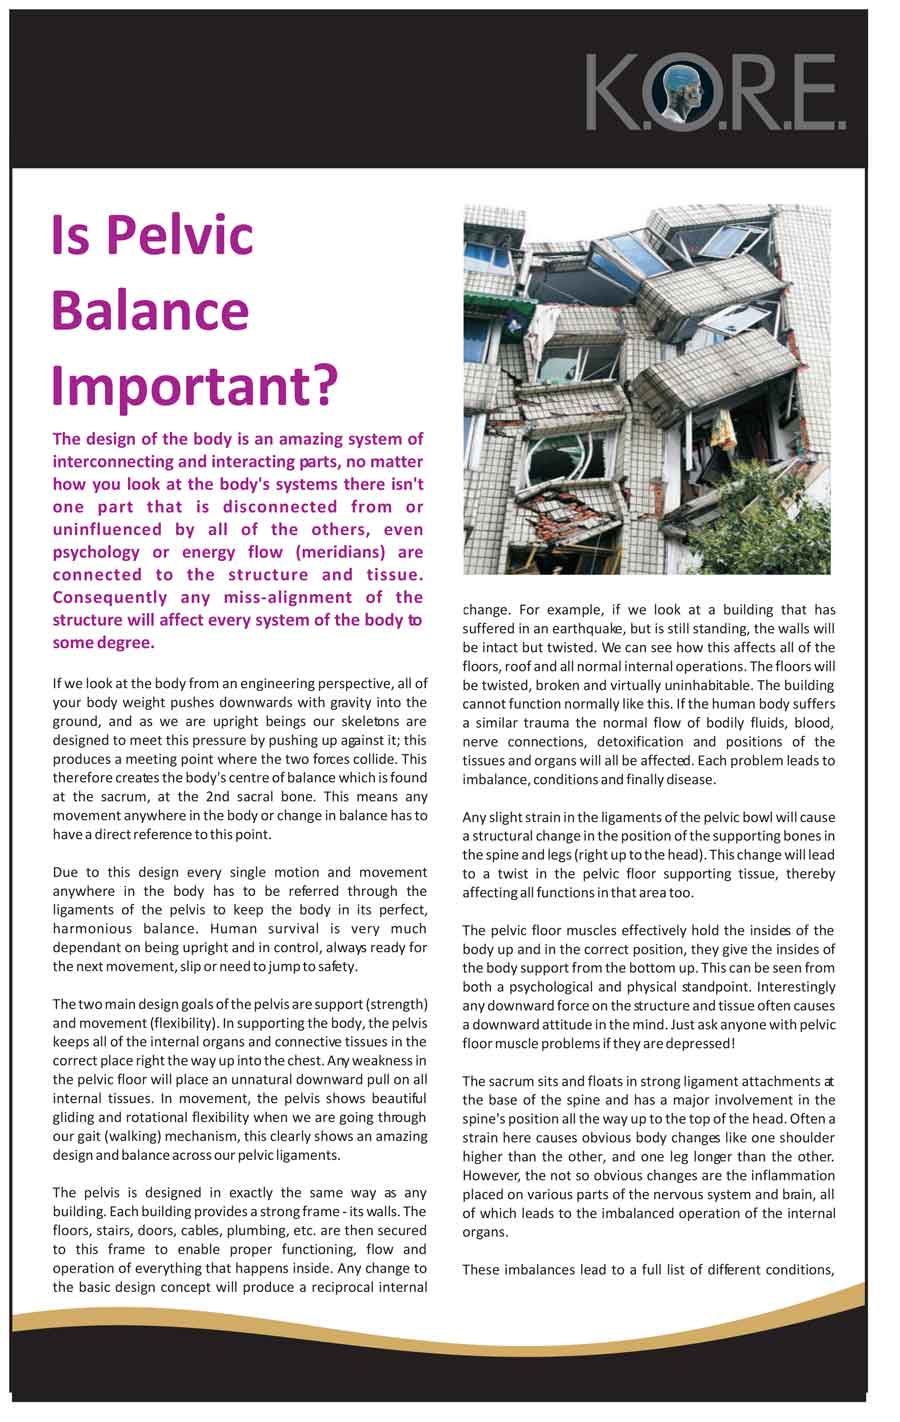 Is Pelvic Balance Important article